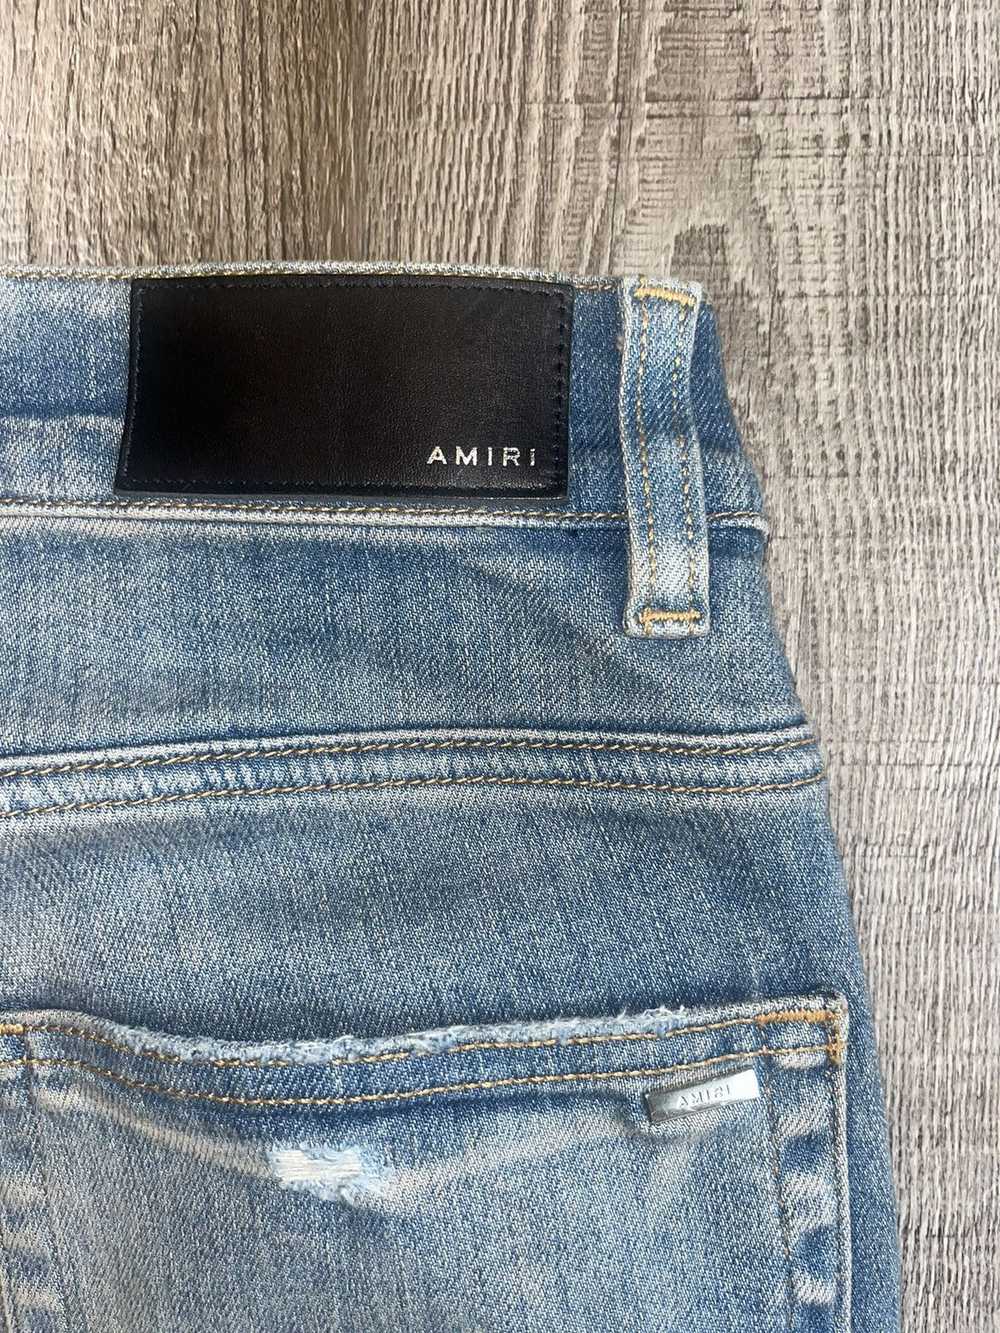 Amiri Amiri Black Leather Patch Jeans - image 5